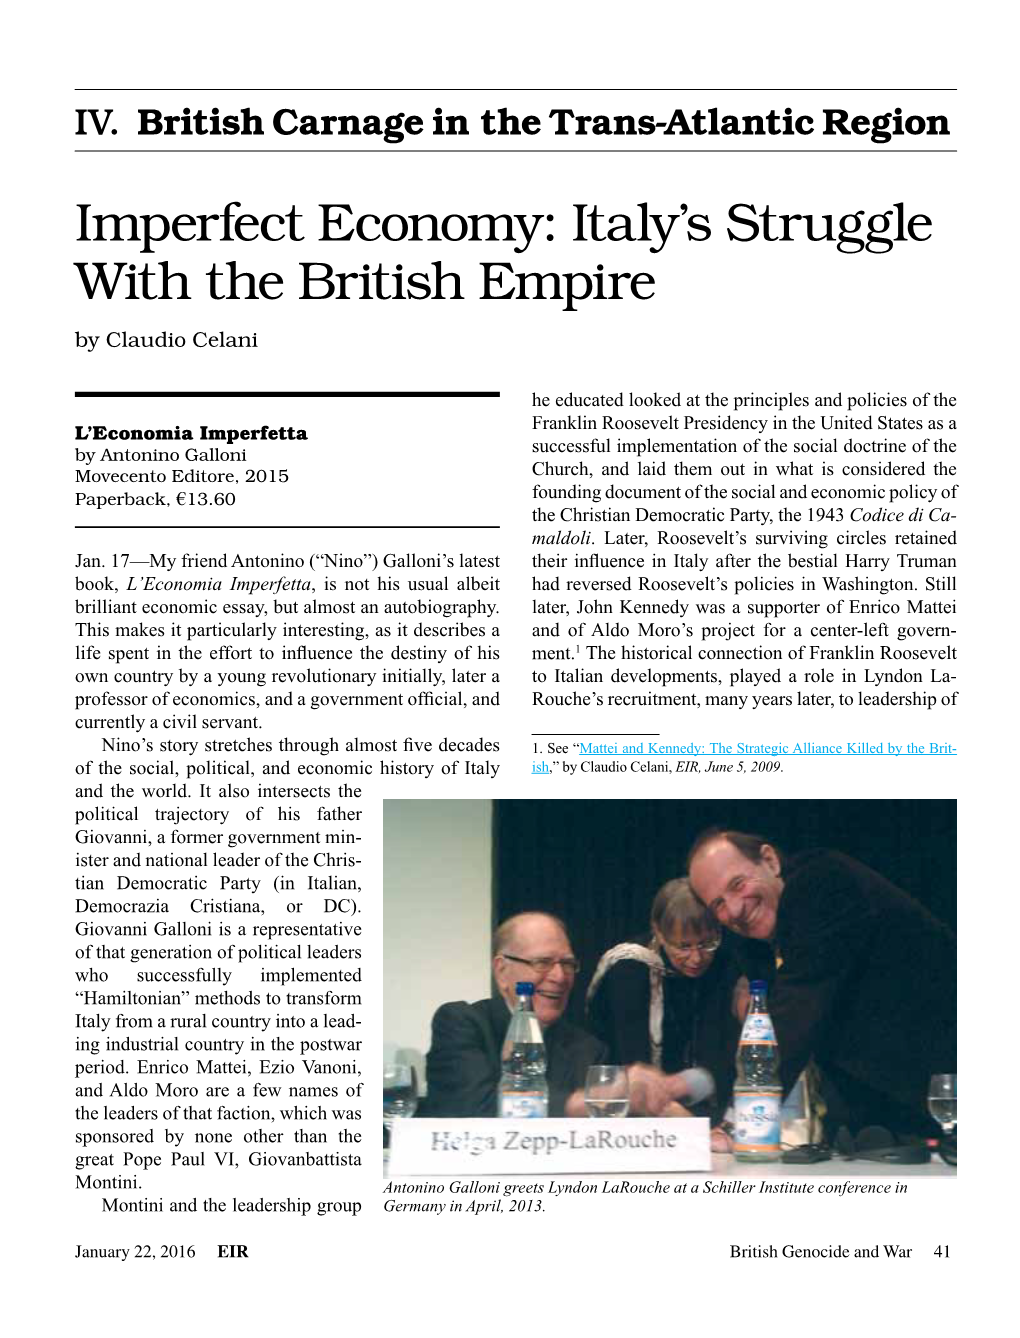 Imperfect Economy: Italy's Struggle with the British Empire